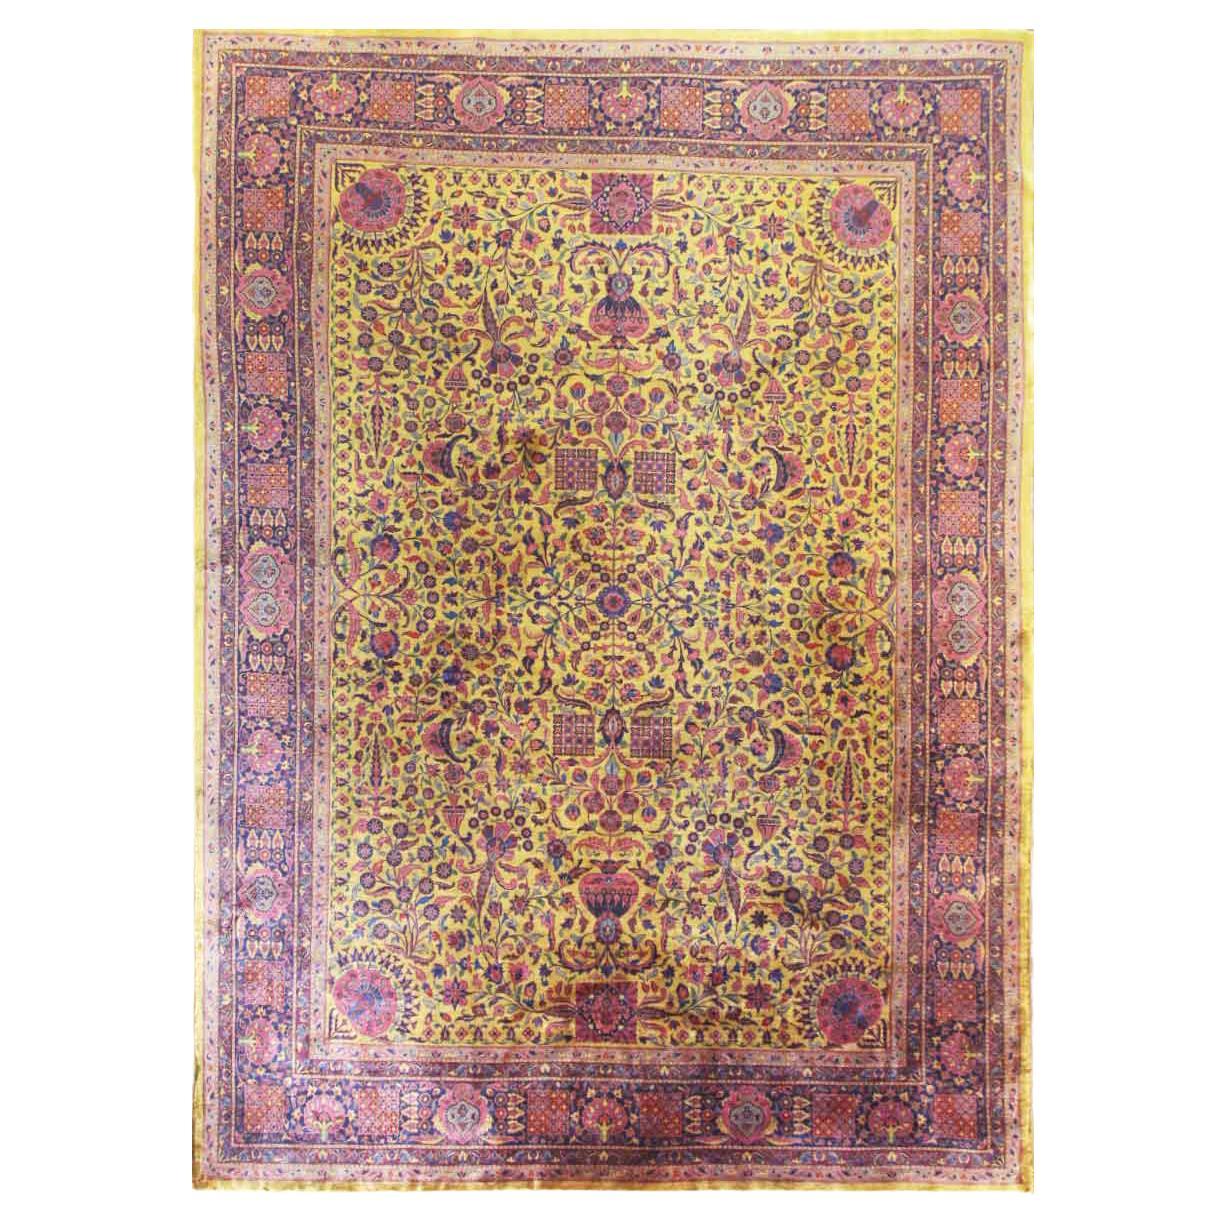 Antique Golden Manchester Kashan Carpet, The Finest, 10' x 14'